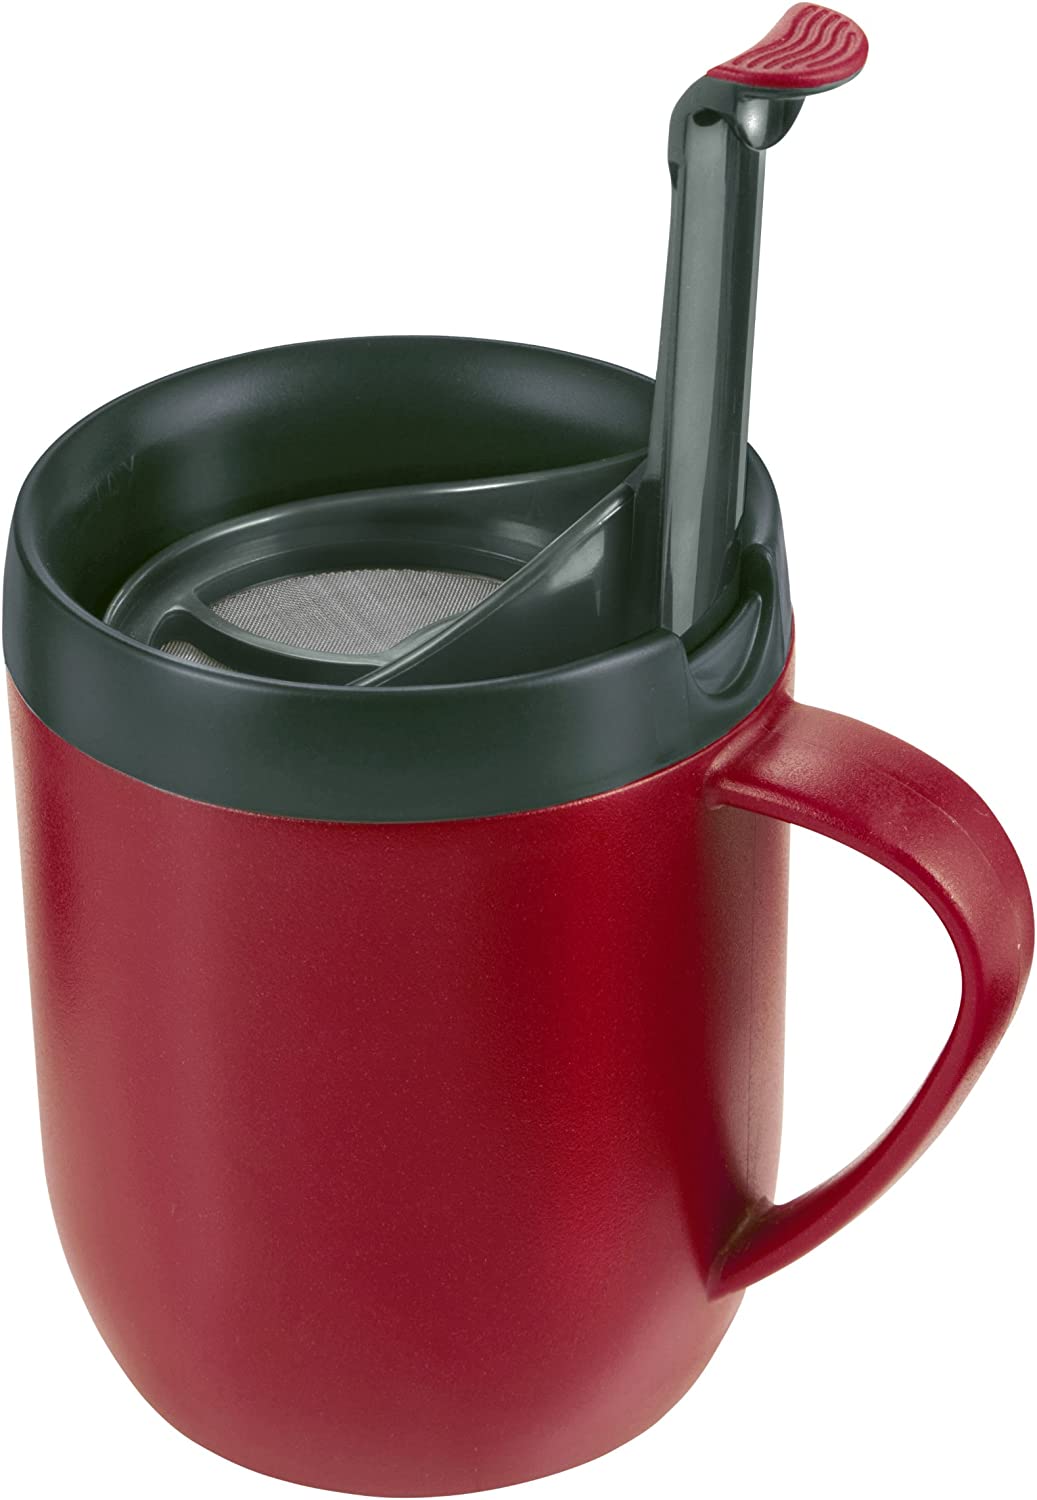 Zyliss Smart Cafe Mug Red